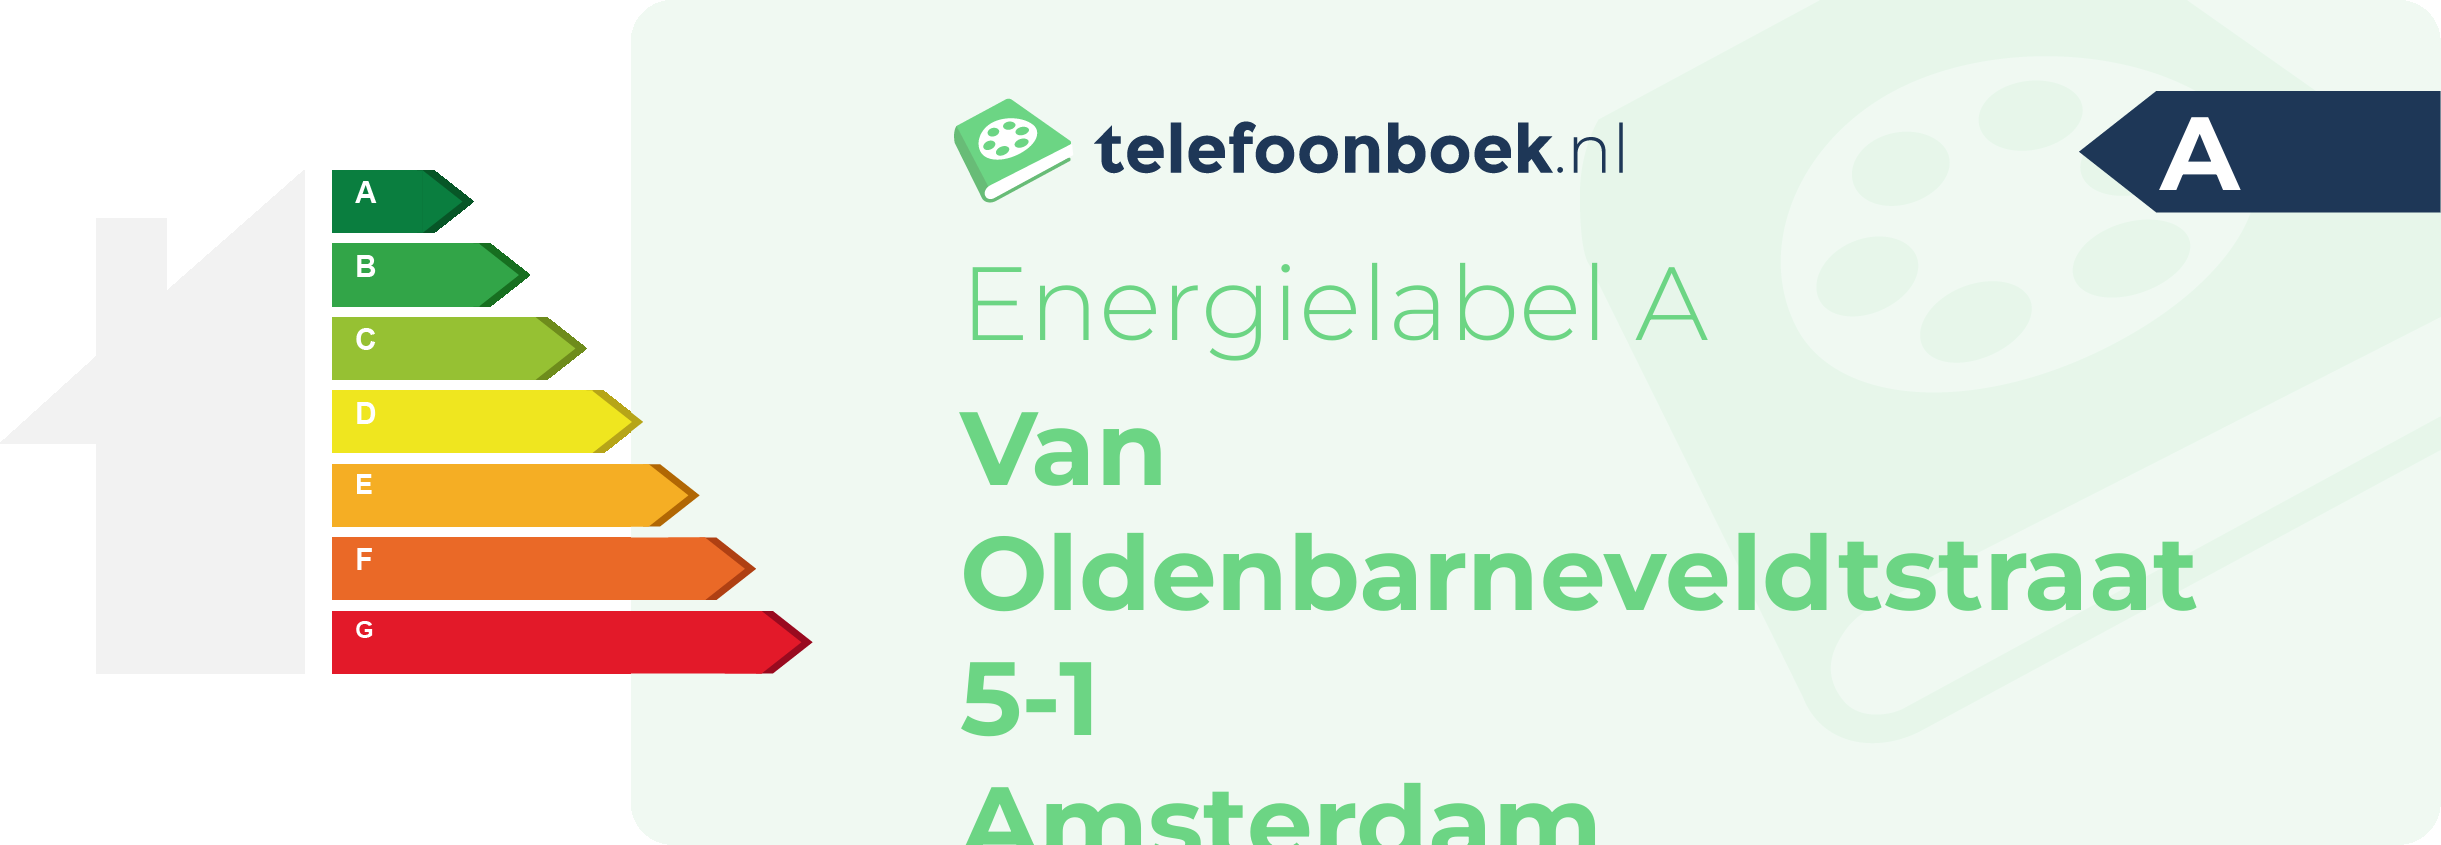 Energielabel Van Oldenbarneveldtstraat 5-1 Amsterdam